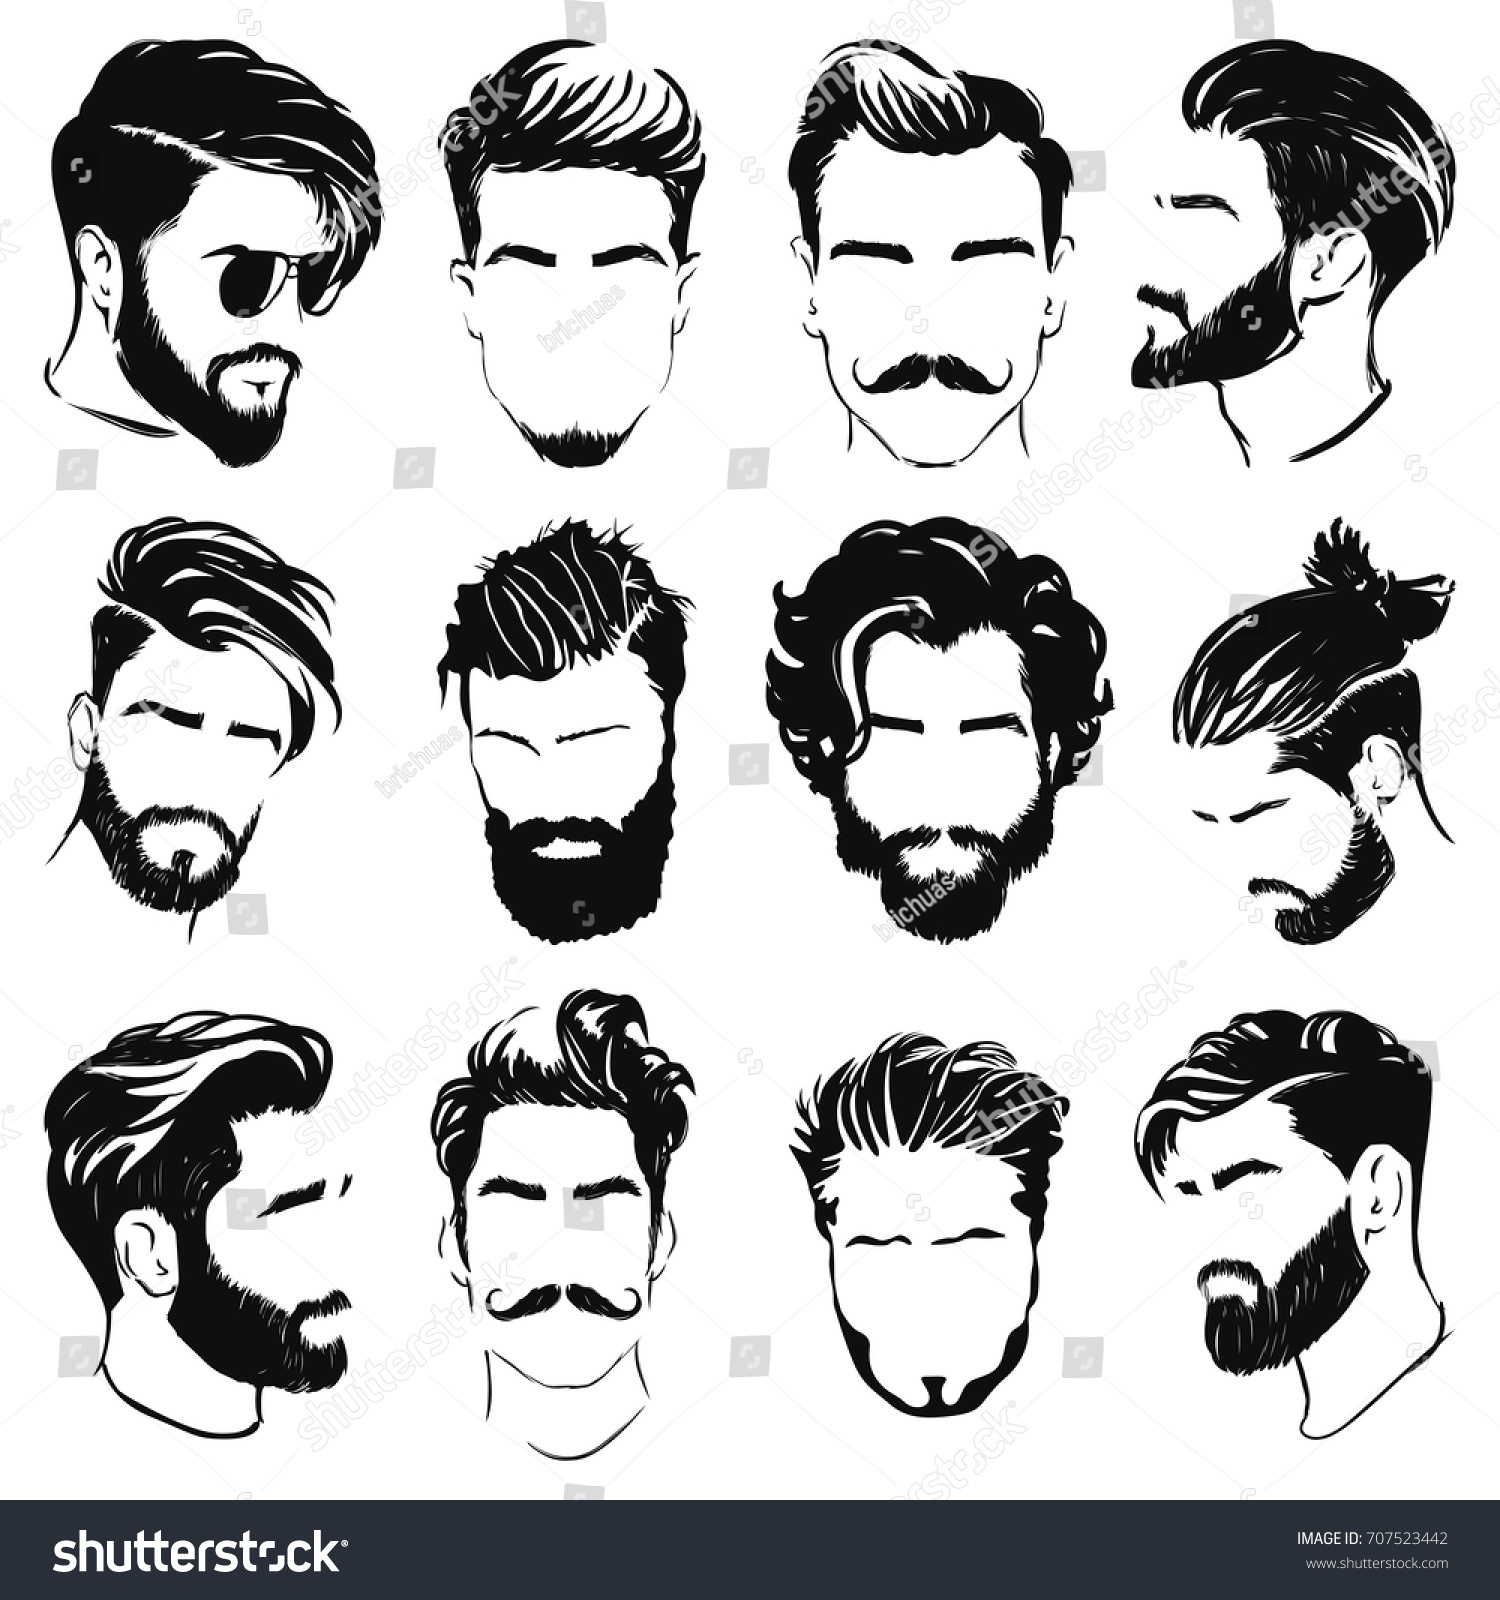 Men hair style models Stock Vectors, Images & Vector Art ...